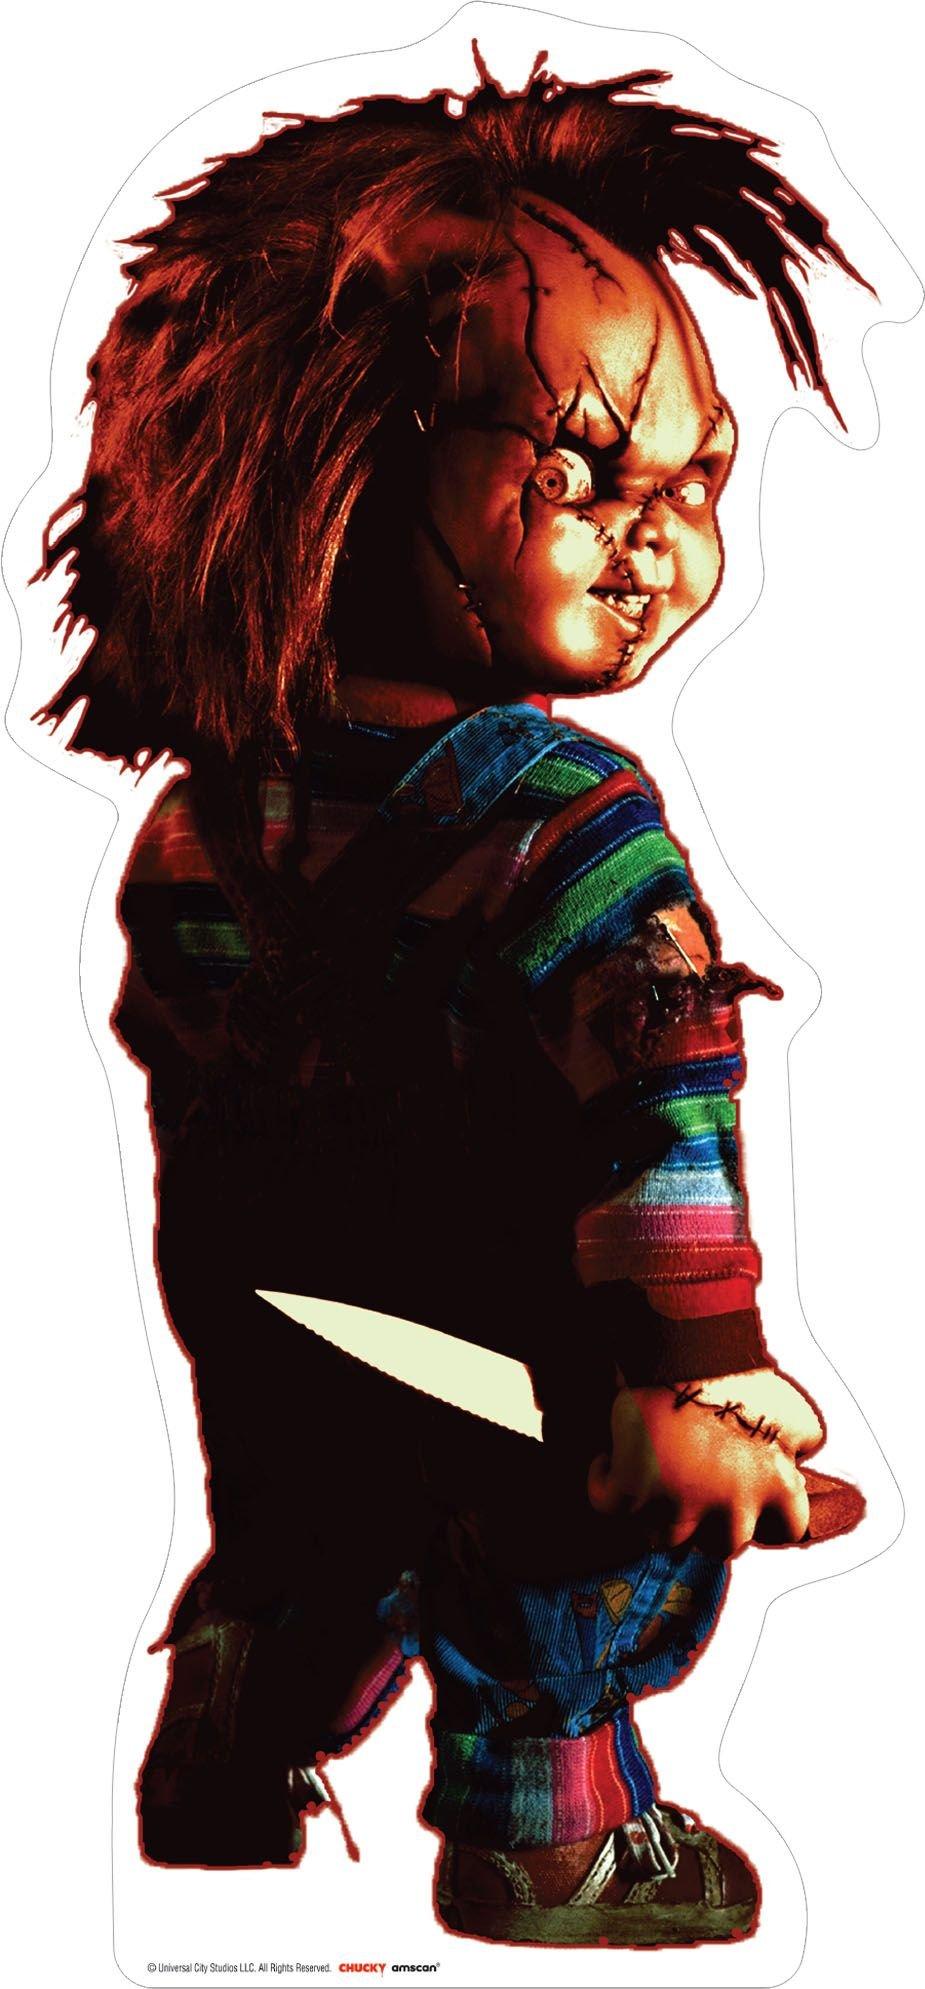 Chucky Life-Size Cardboard Cutout - Child's Play